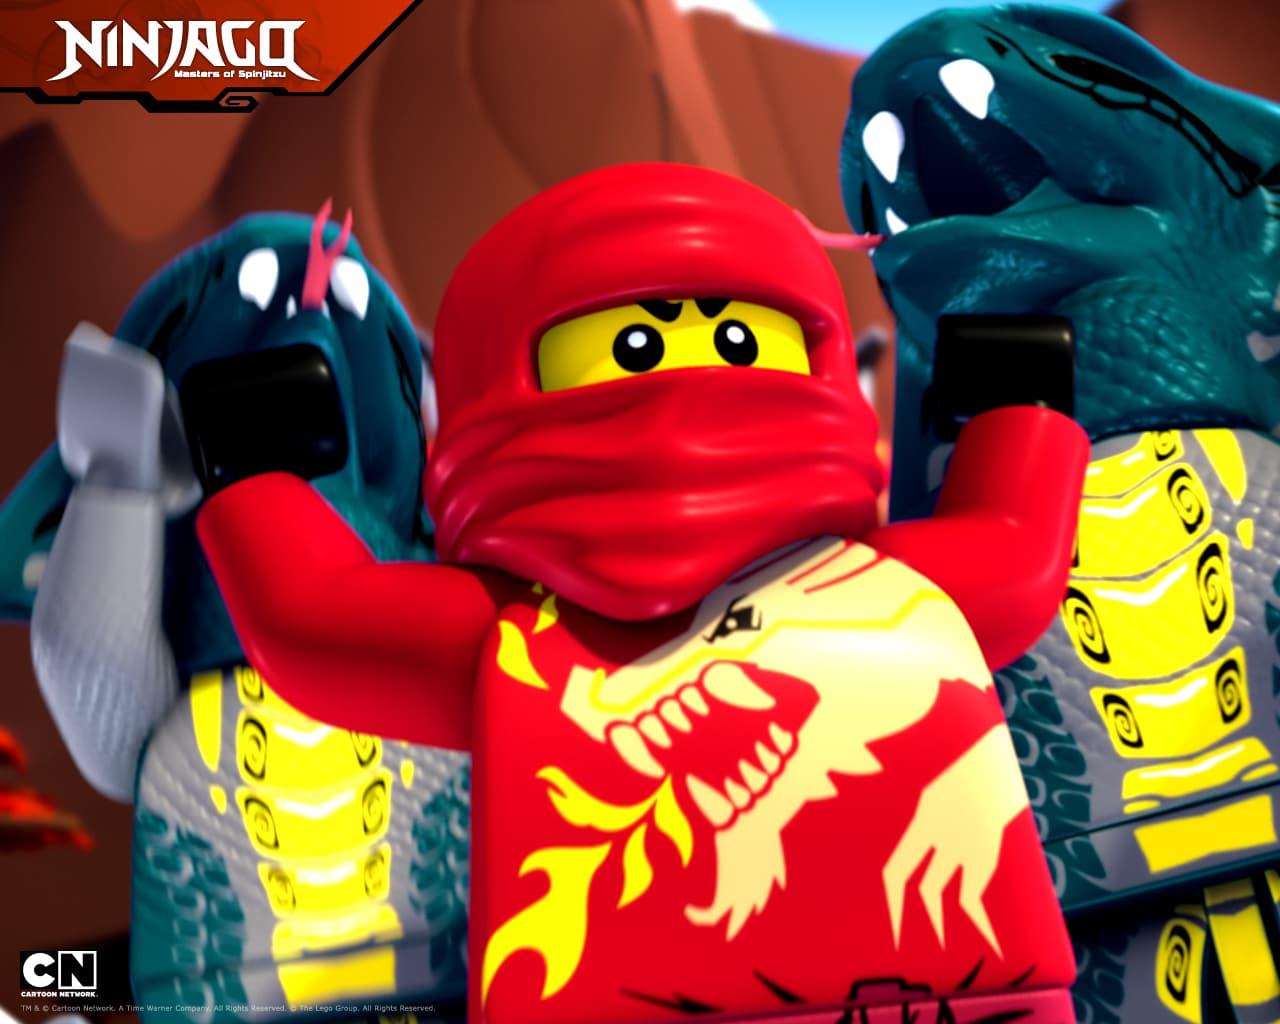 Lego Ninjago Kai Wallpapers Top Free Lego Ninjago Kai Backgrounds